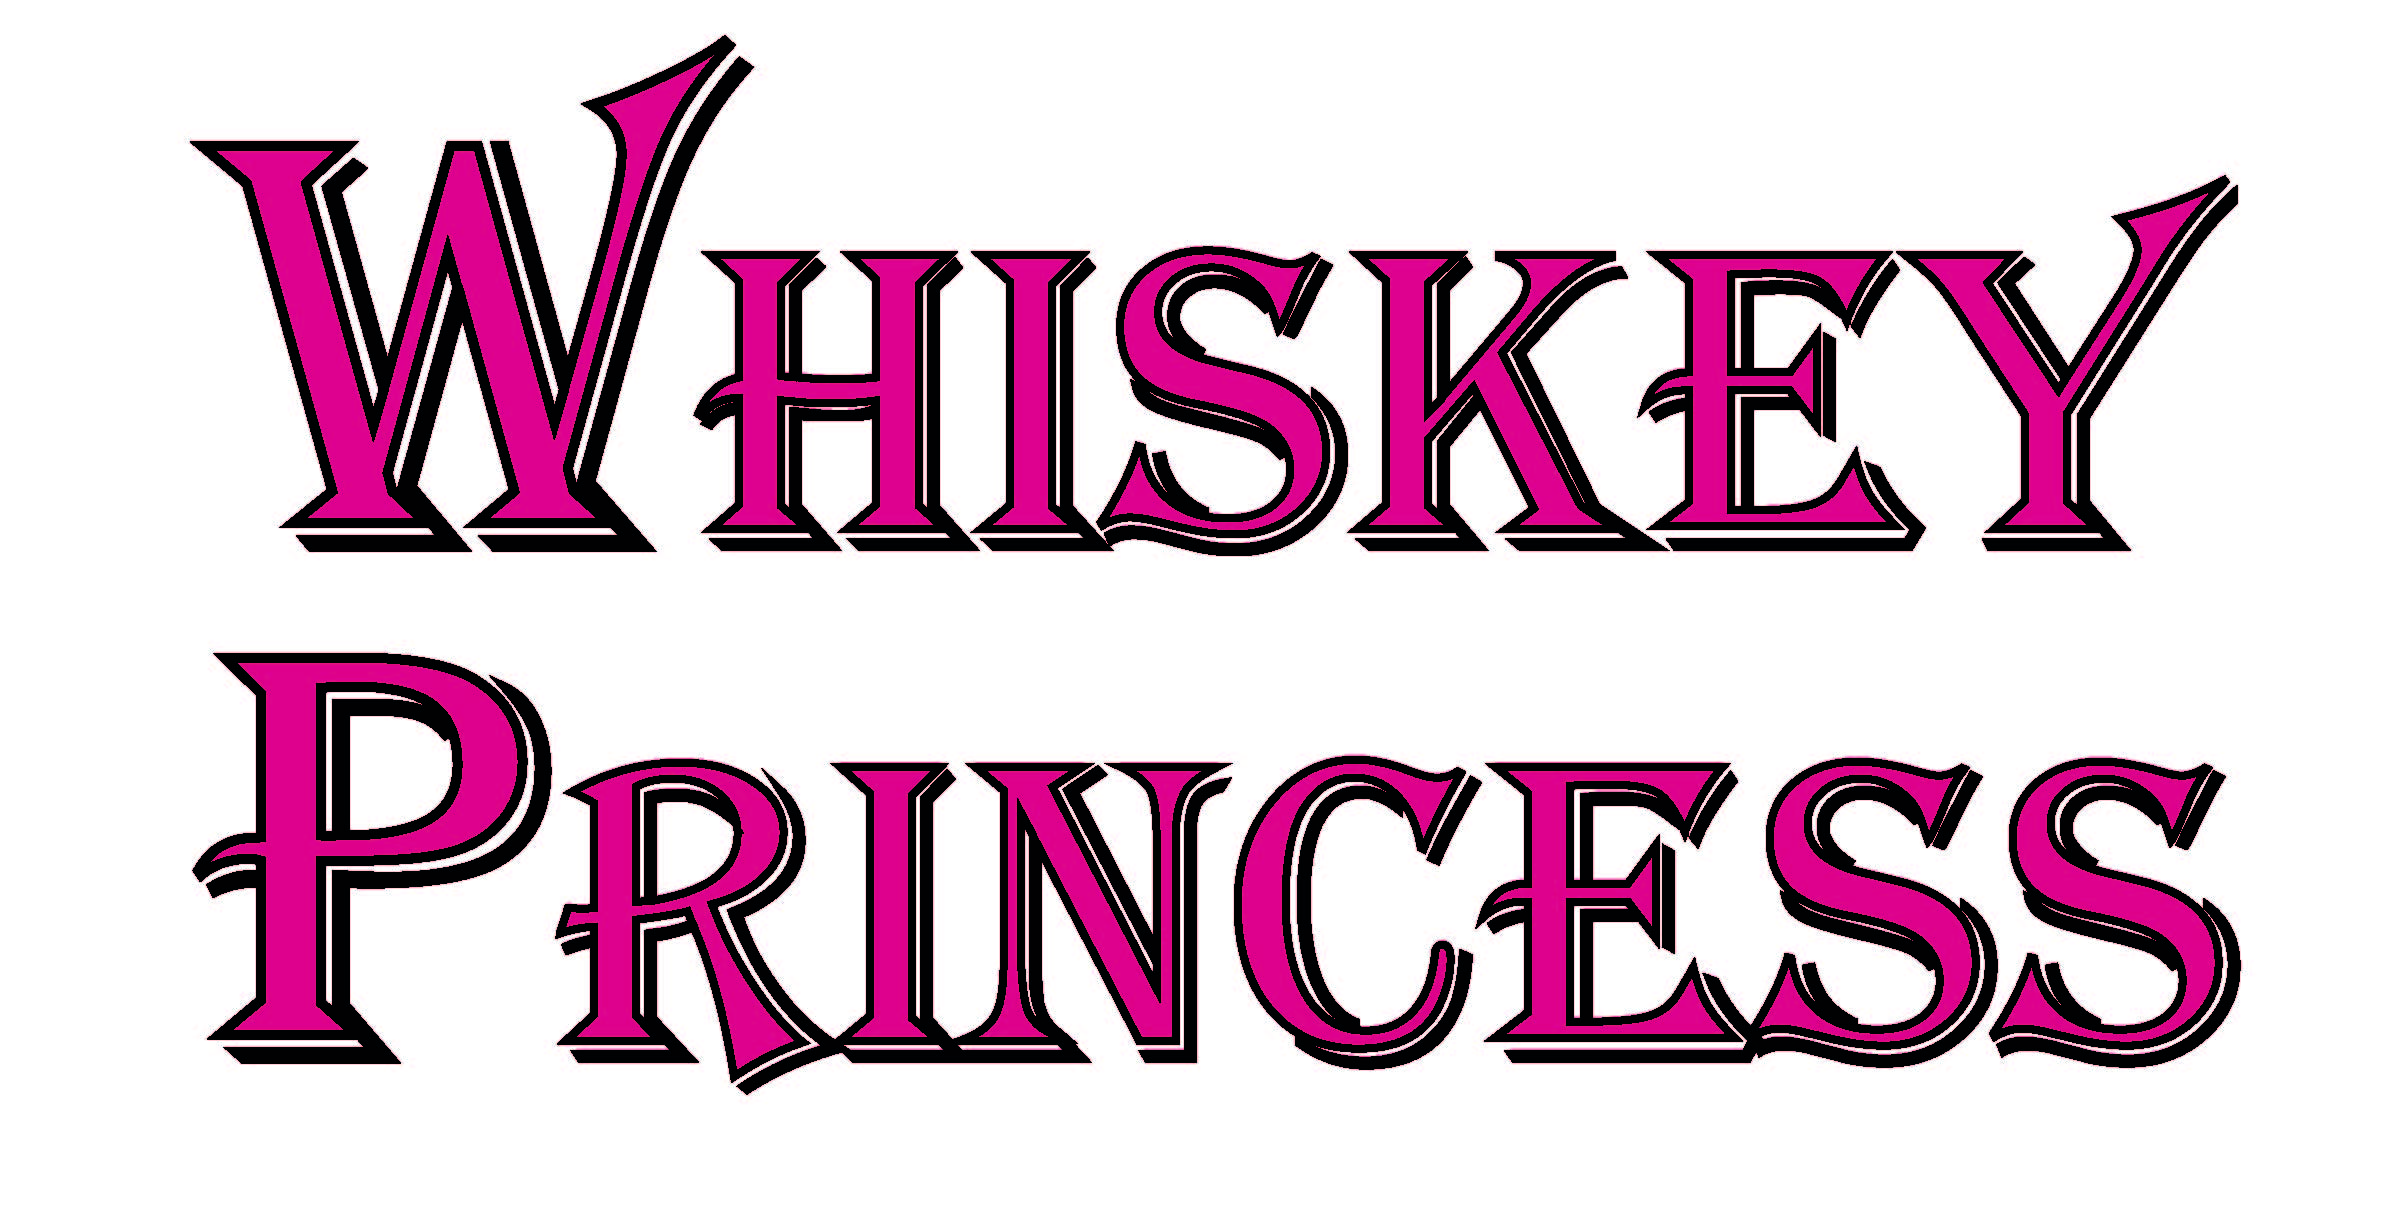 Whiskey Princess